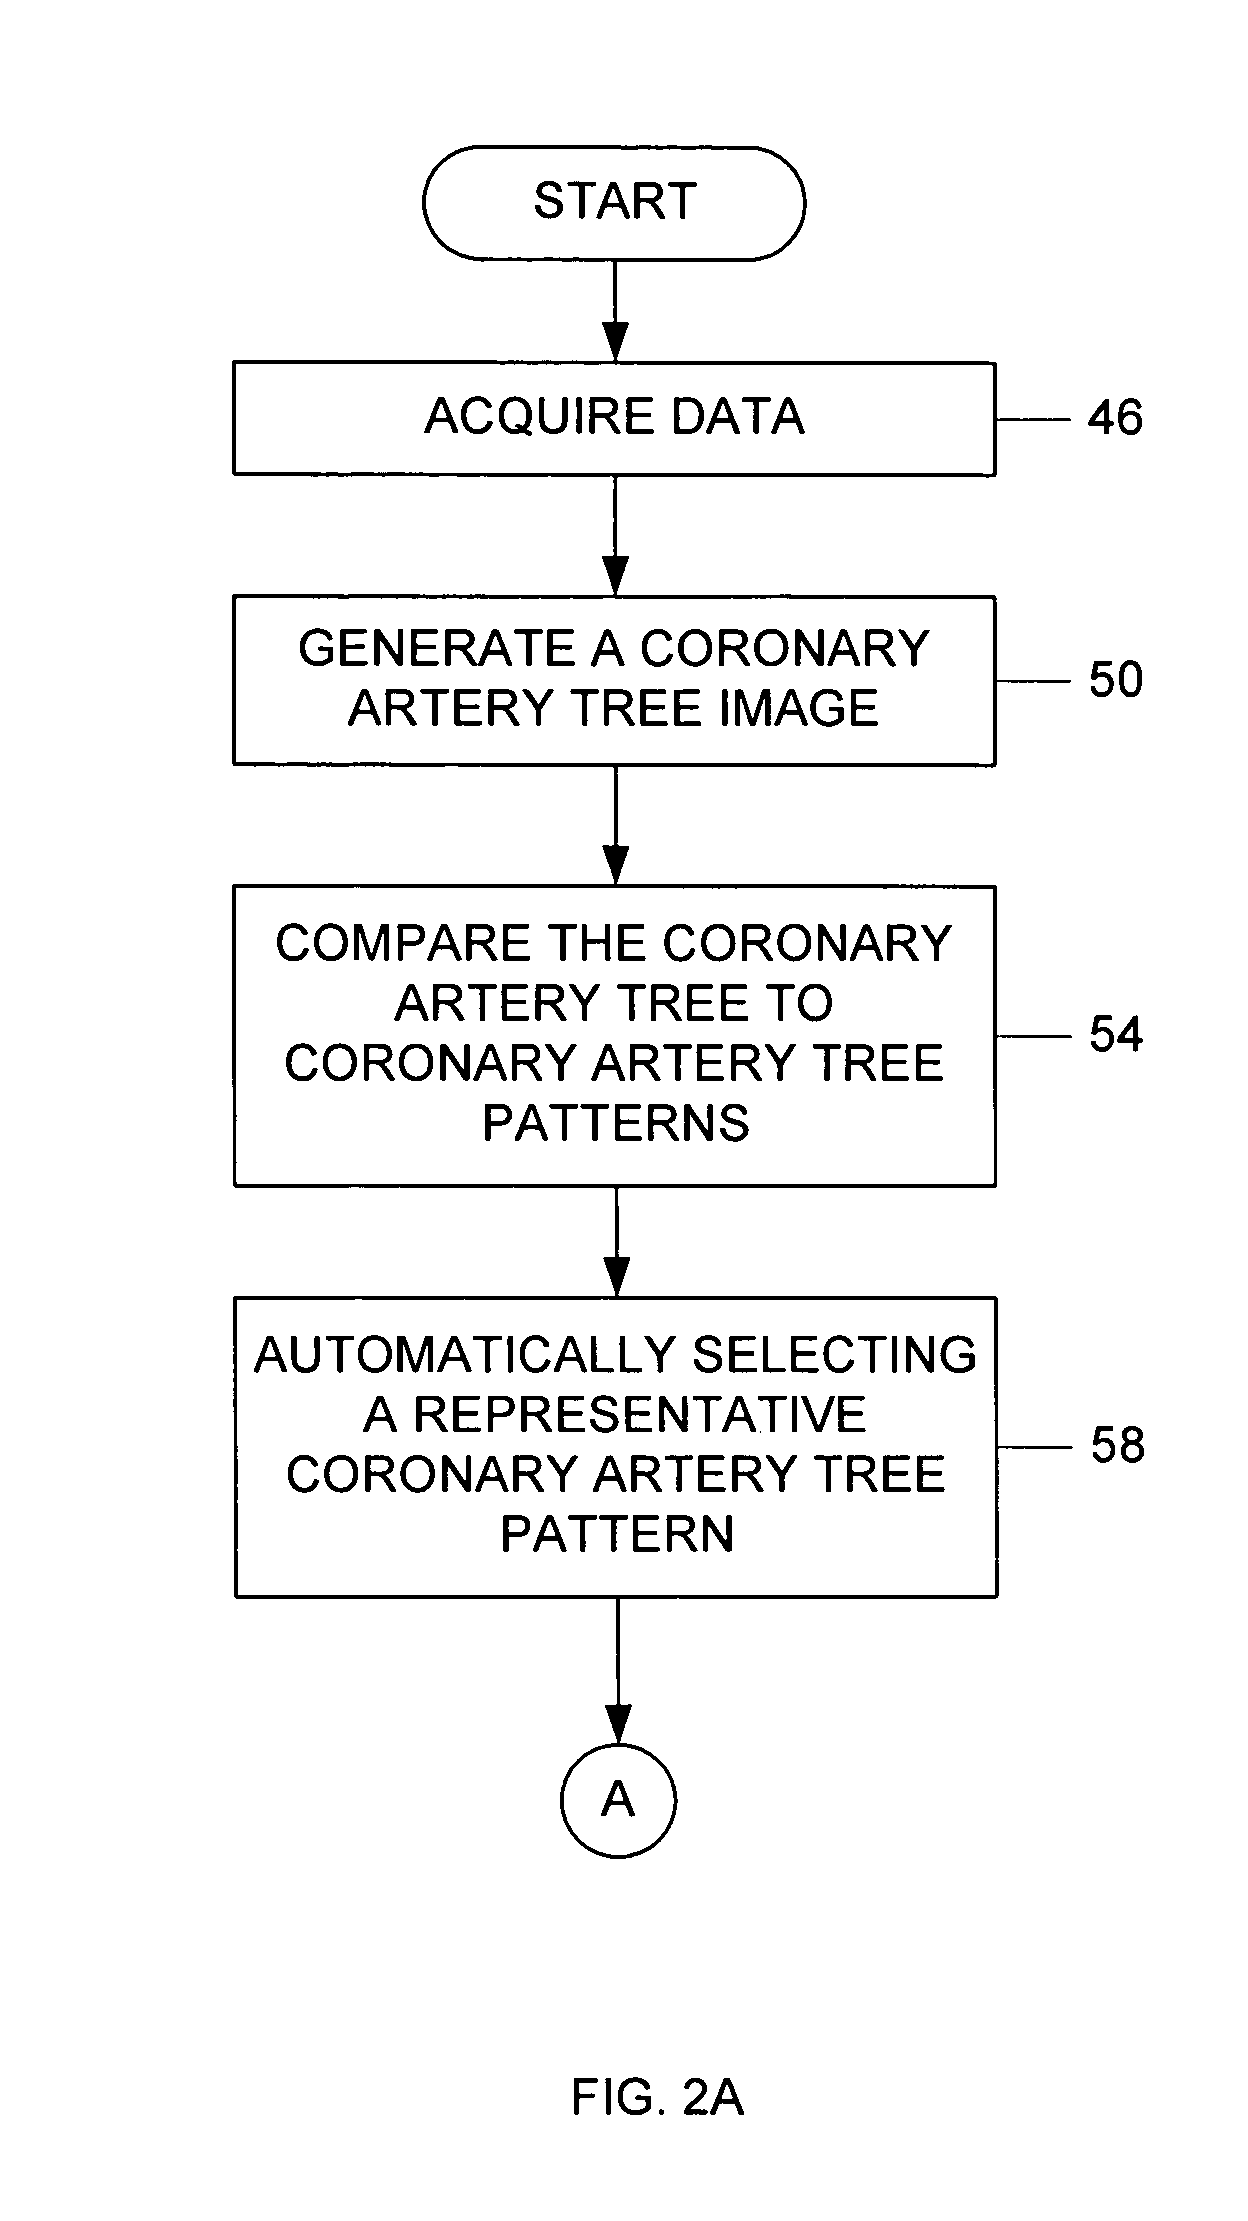 Coronary artery tree imaging system and method